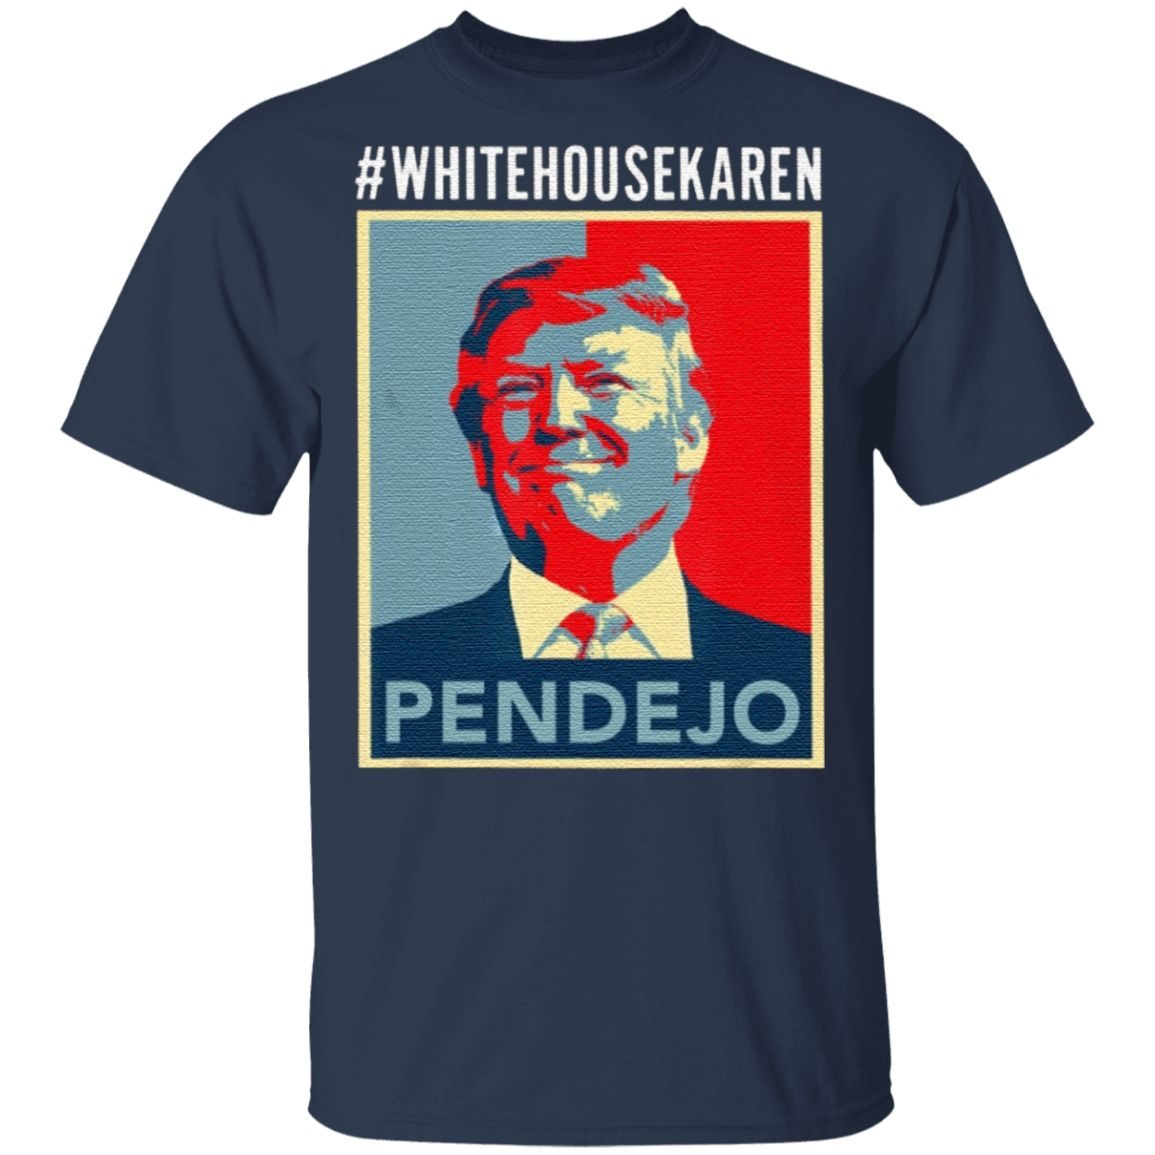 Trump White House Karen Pendejo T Shirt